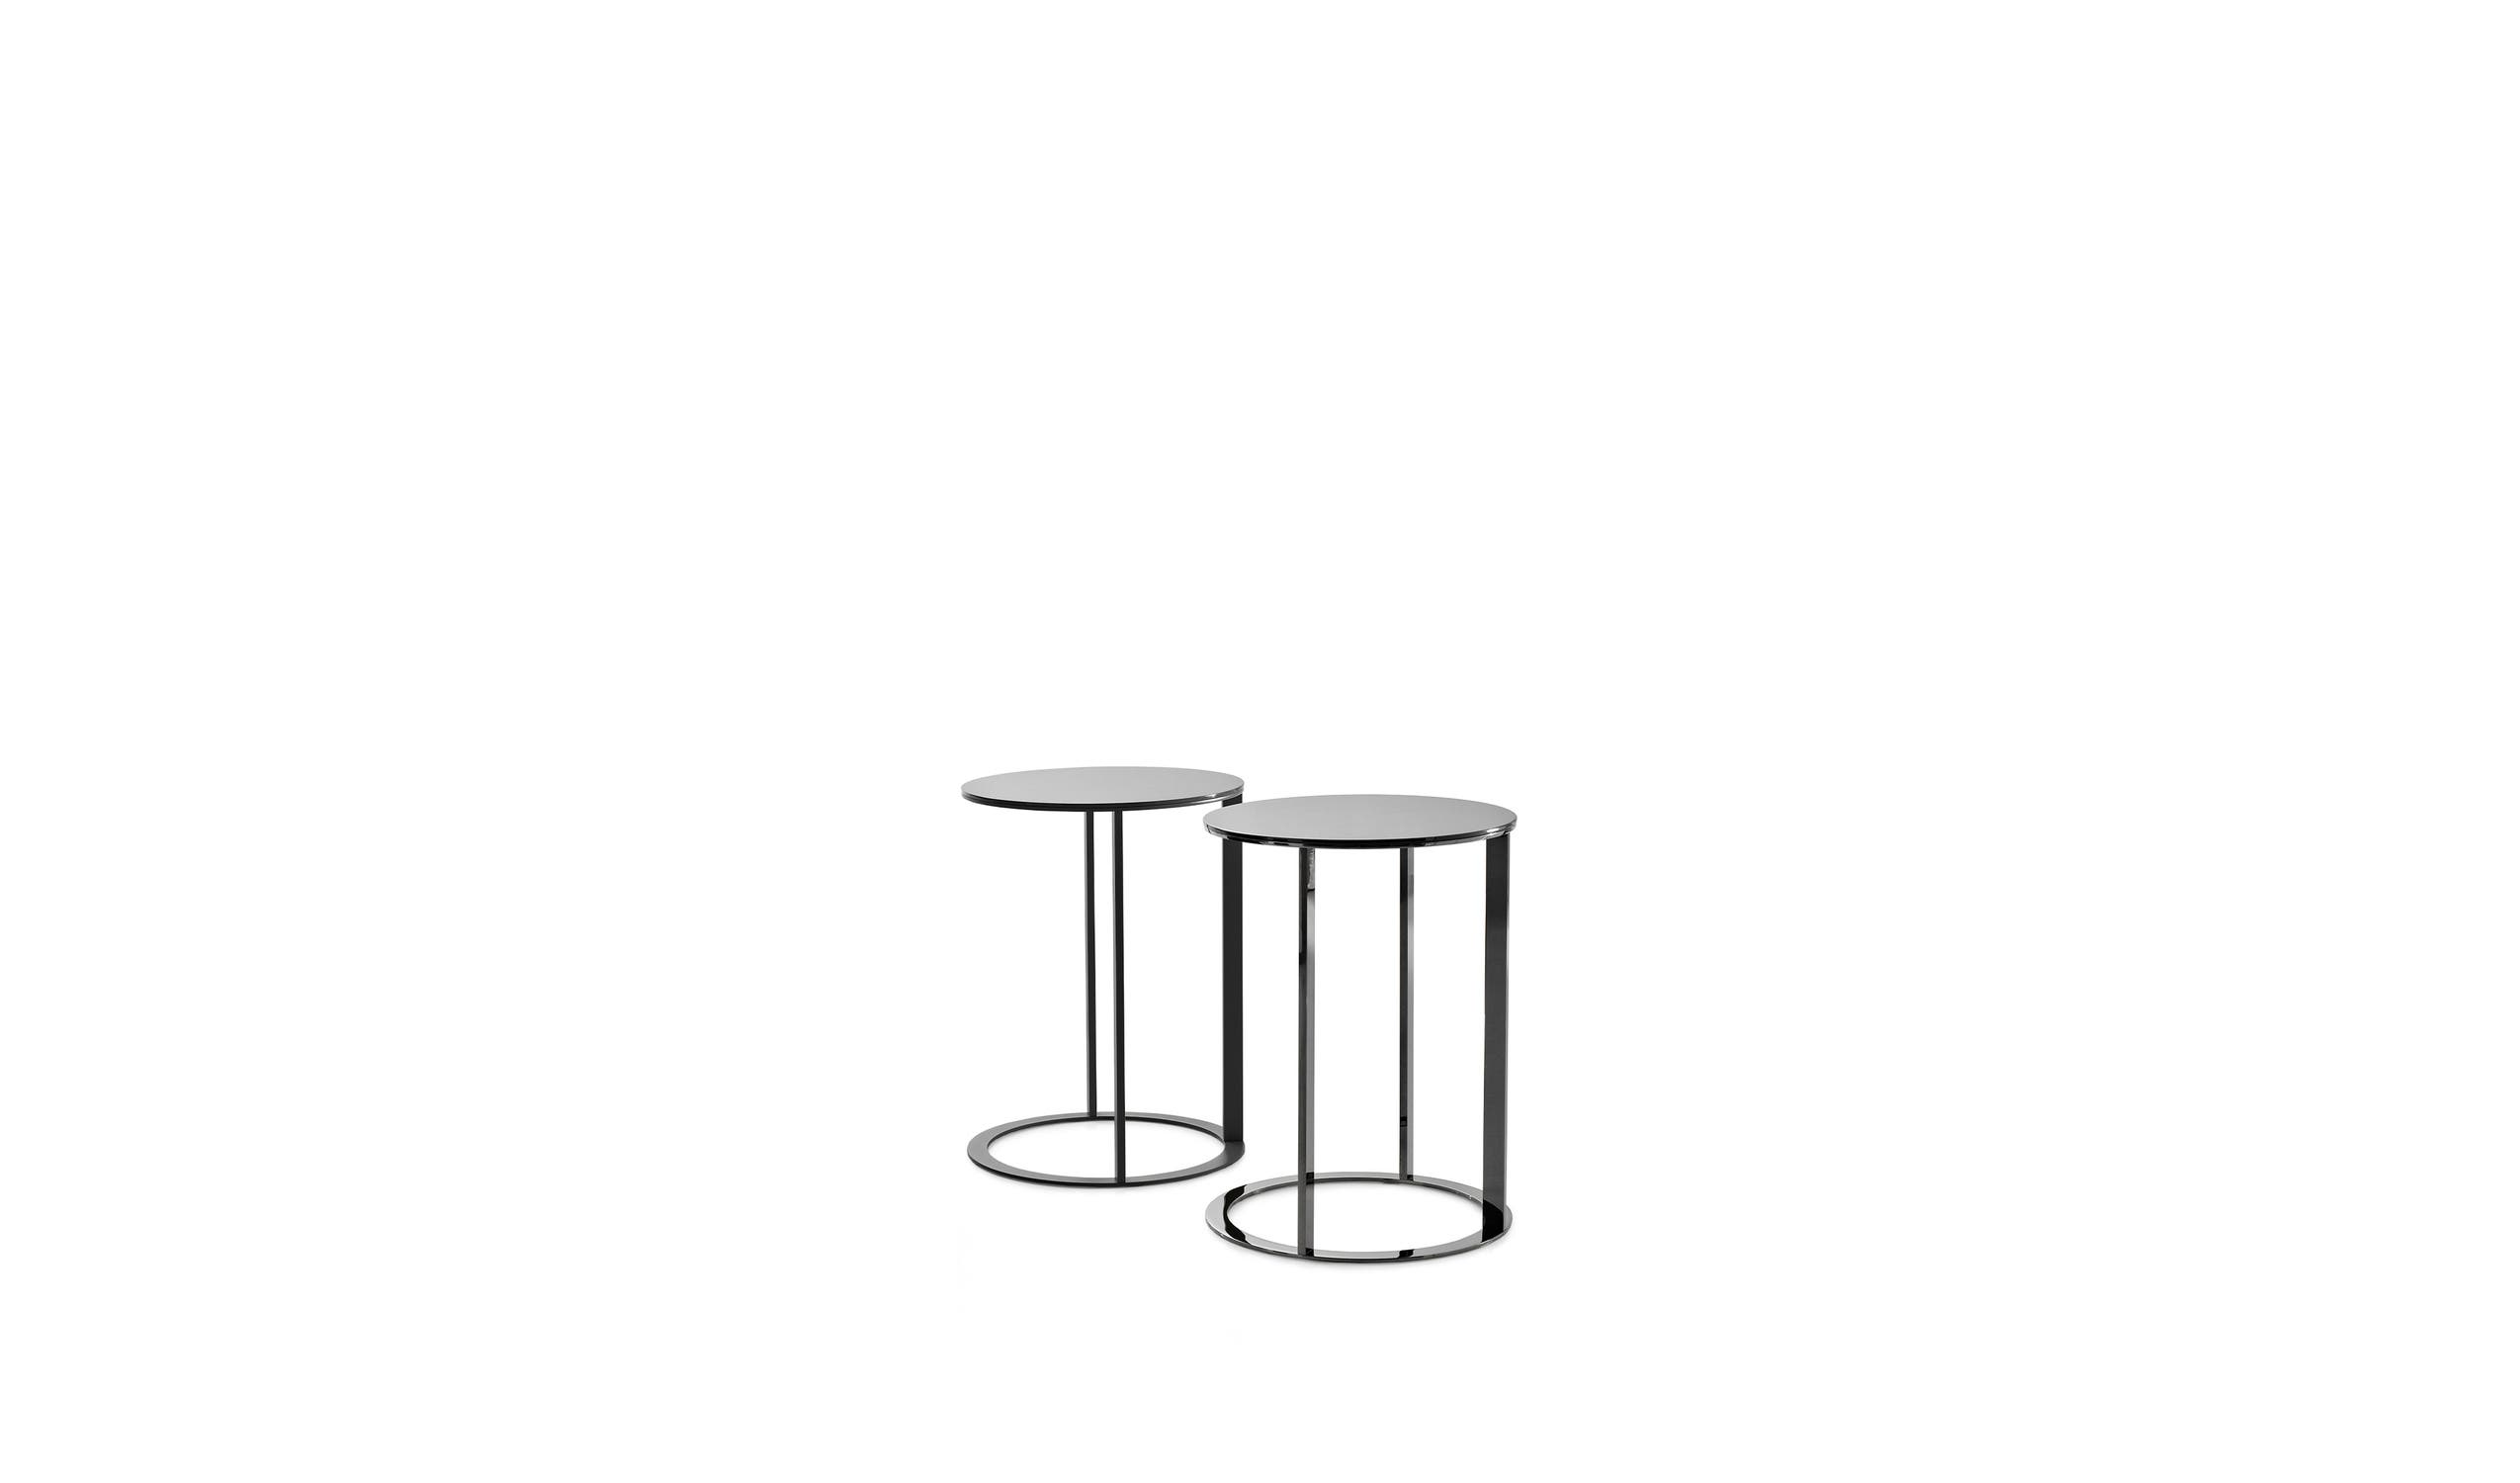 Designer italian modern small tables  - Frank Small tables